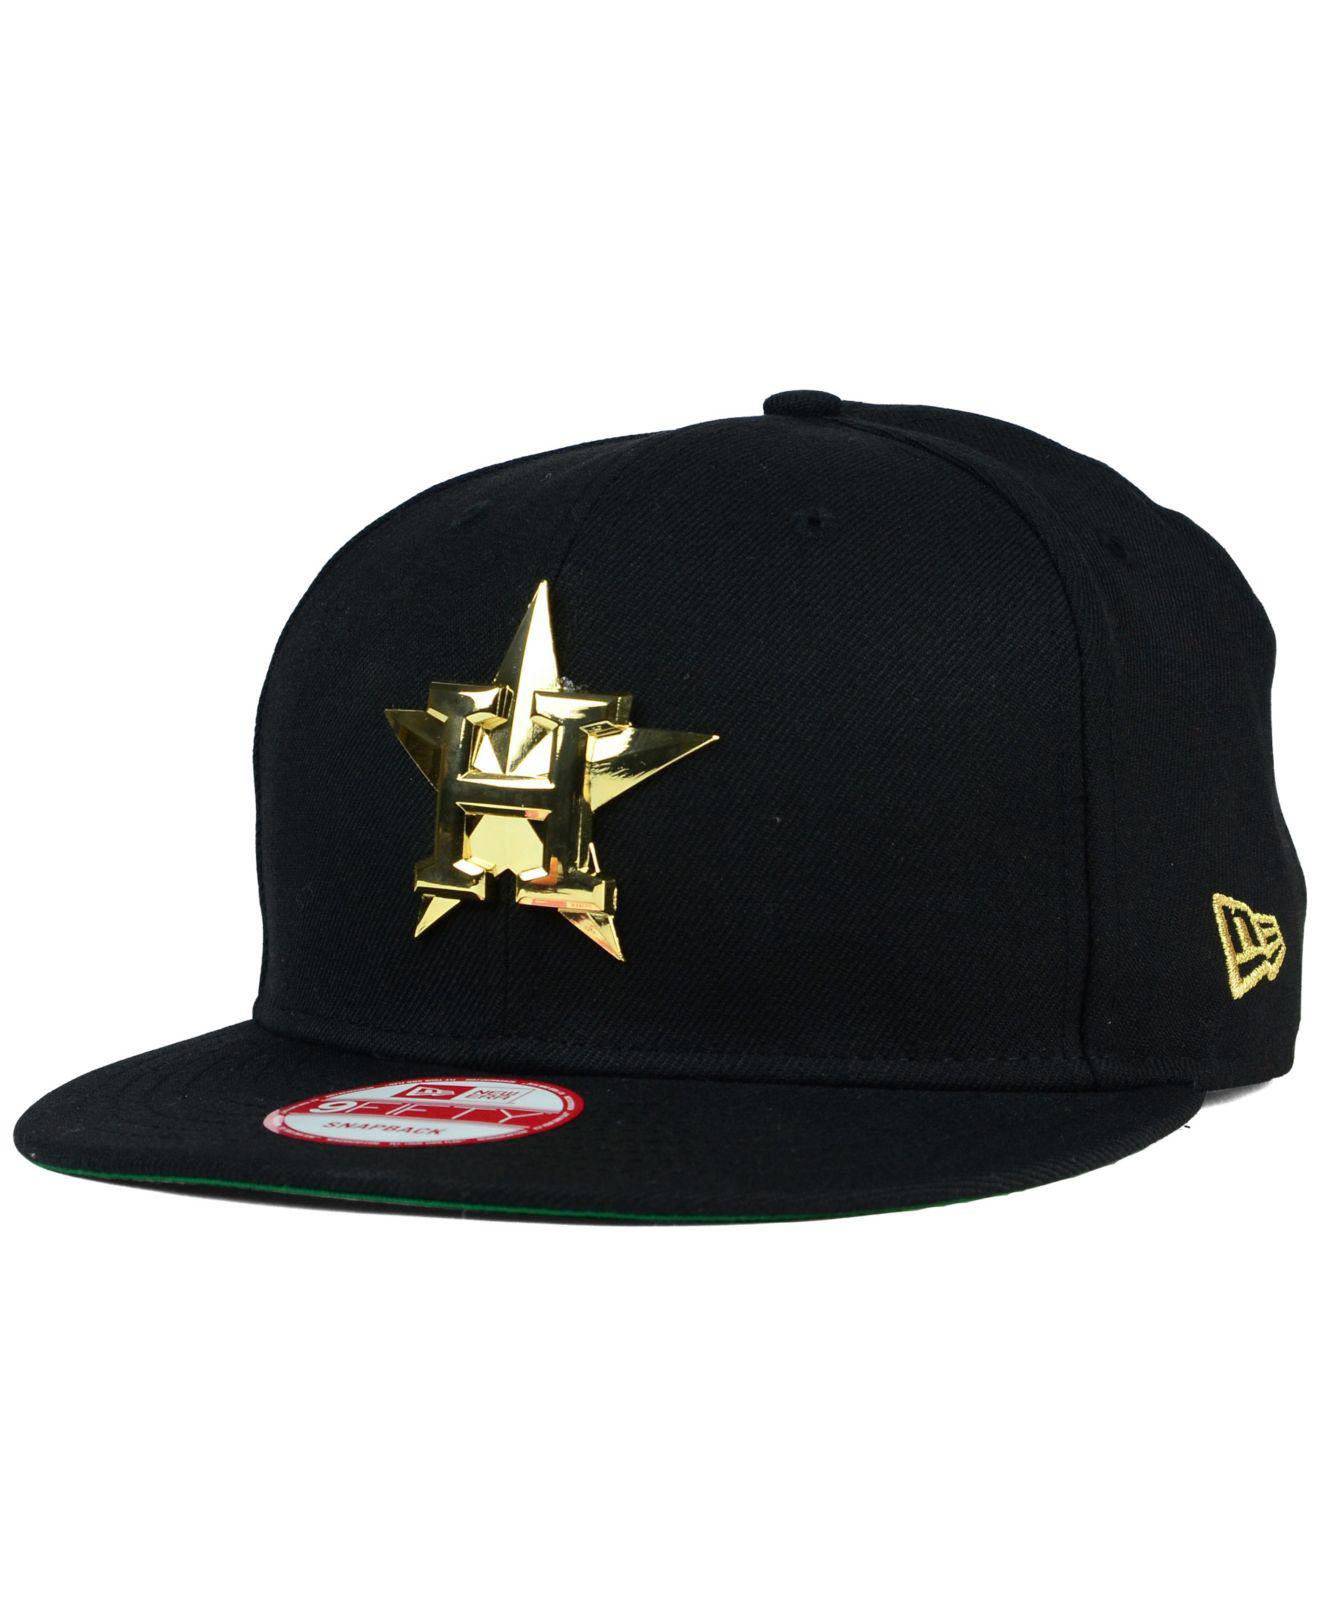 KTZ Houston Astros League O'gold 9fifty Snapback Cap in Black for Men